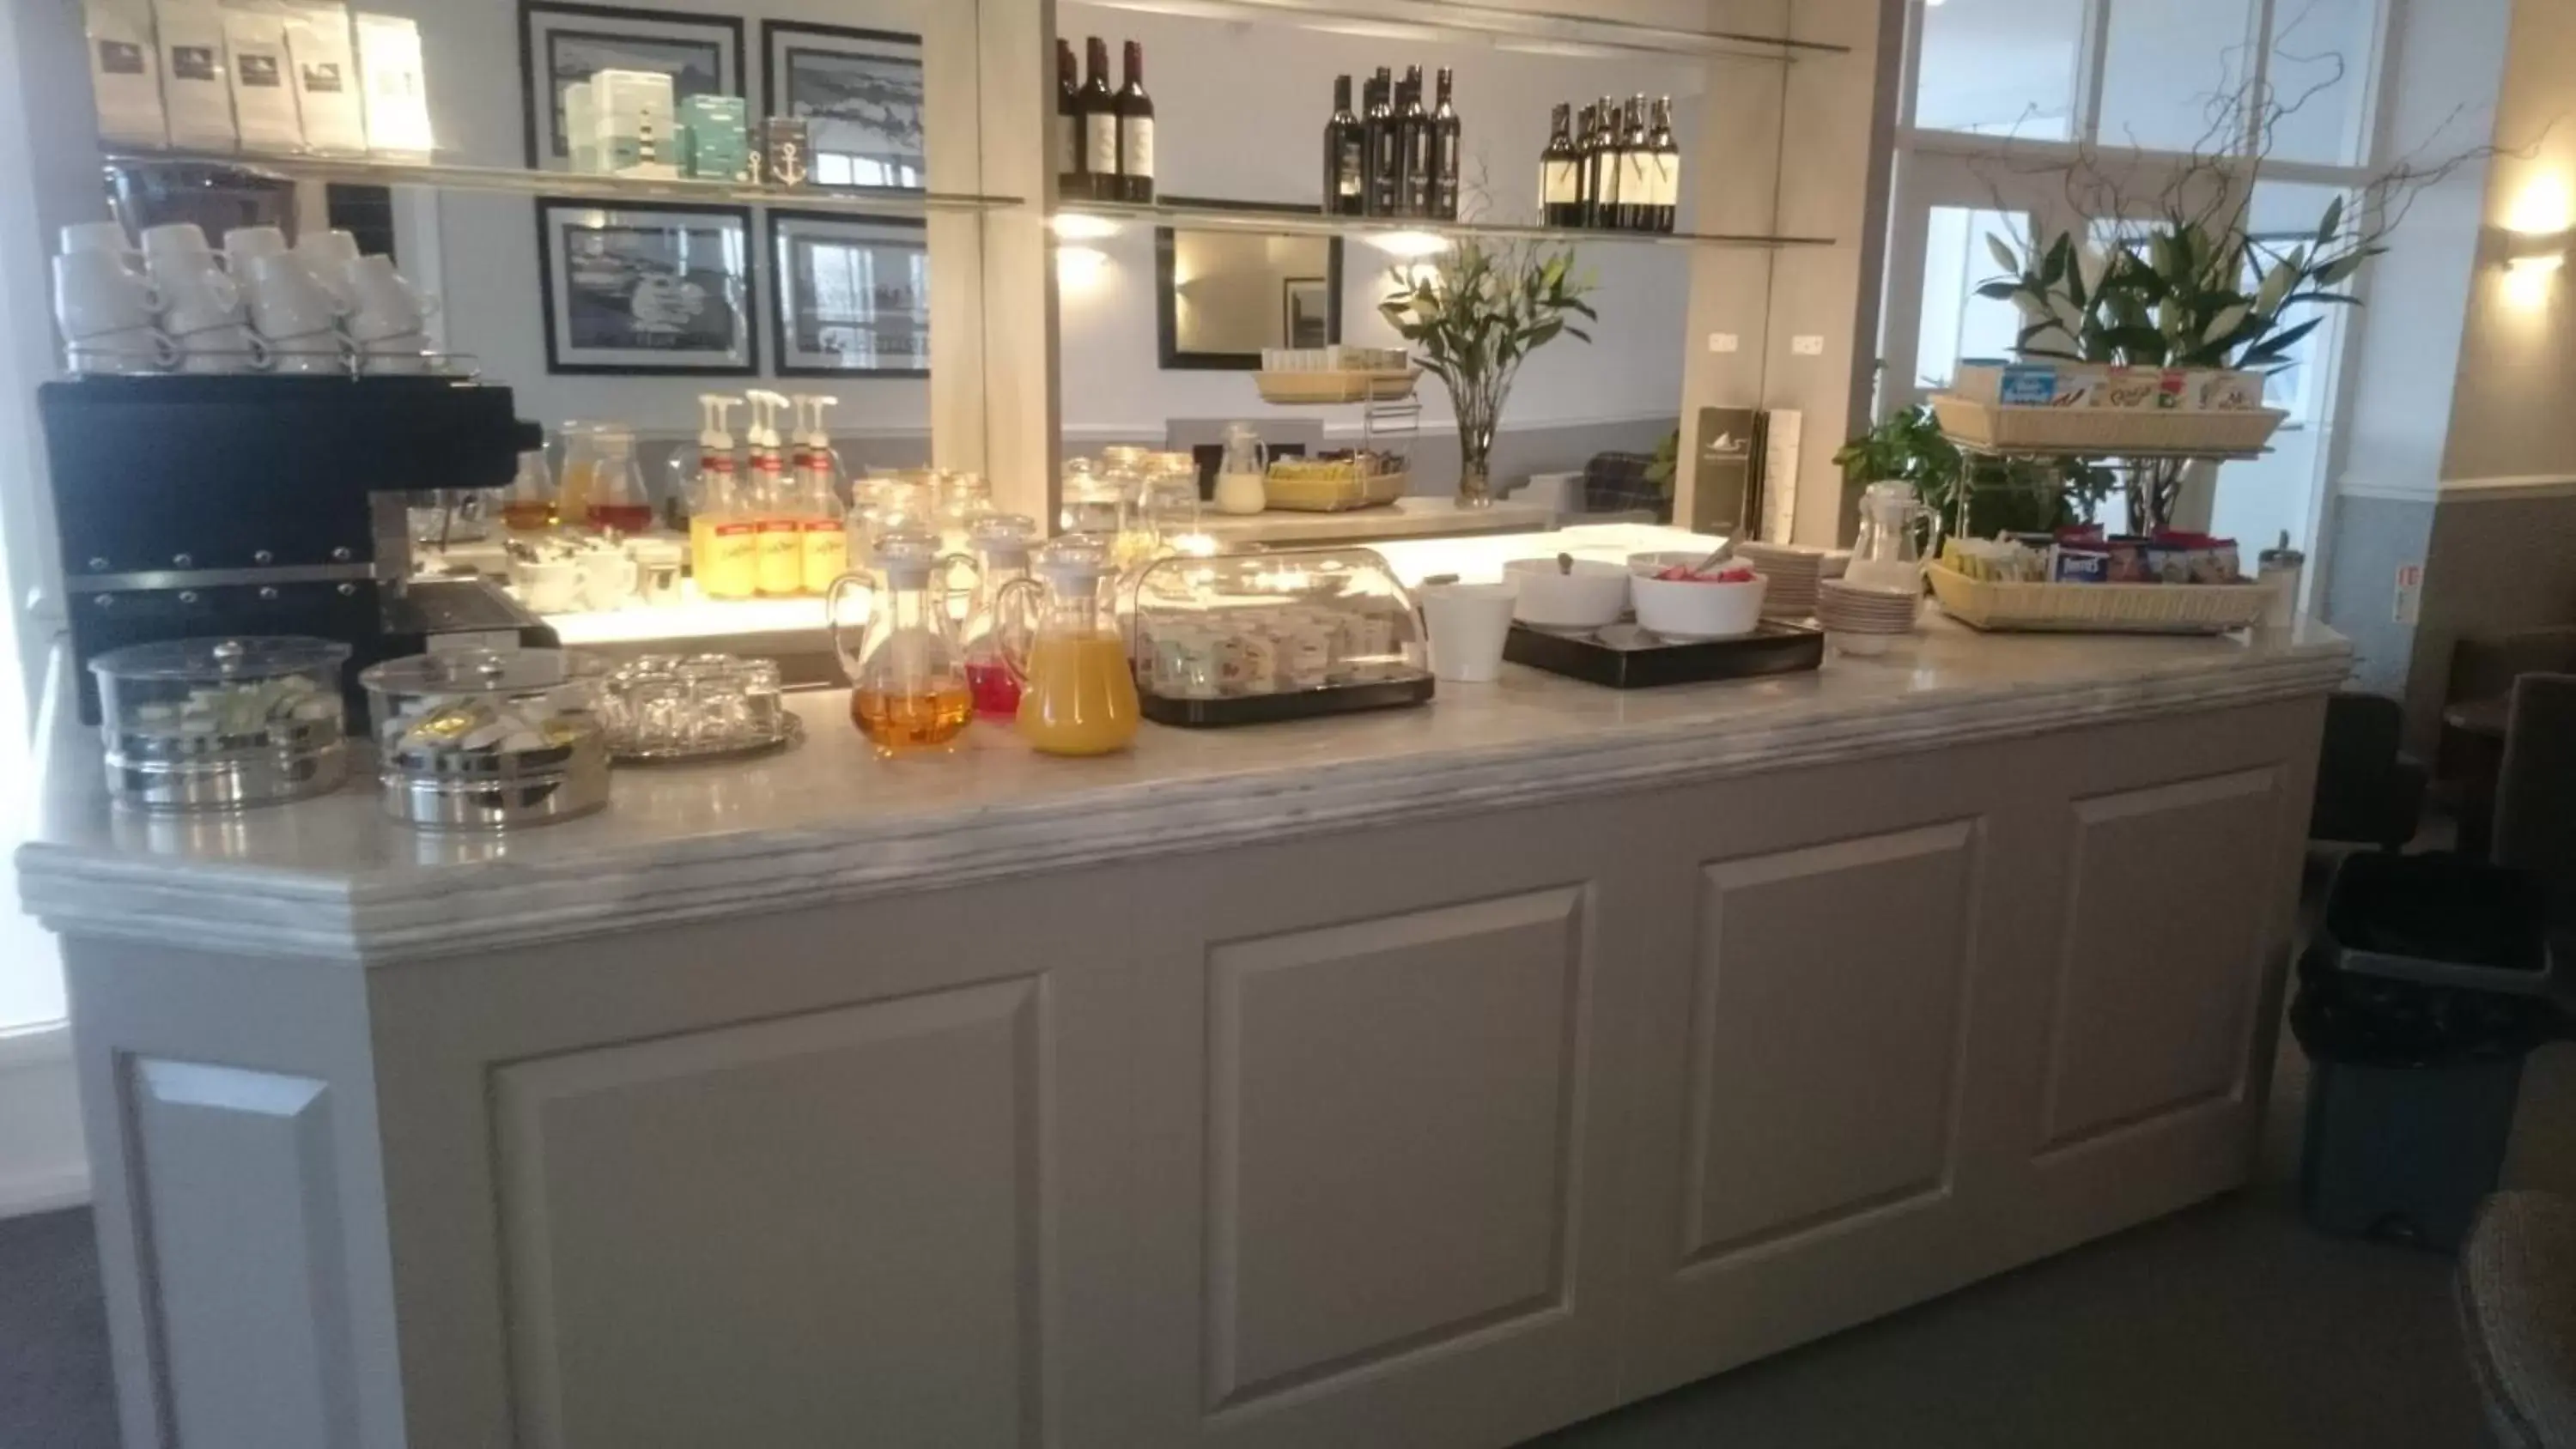 Buffet breakfast in The White Lodge Hotel